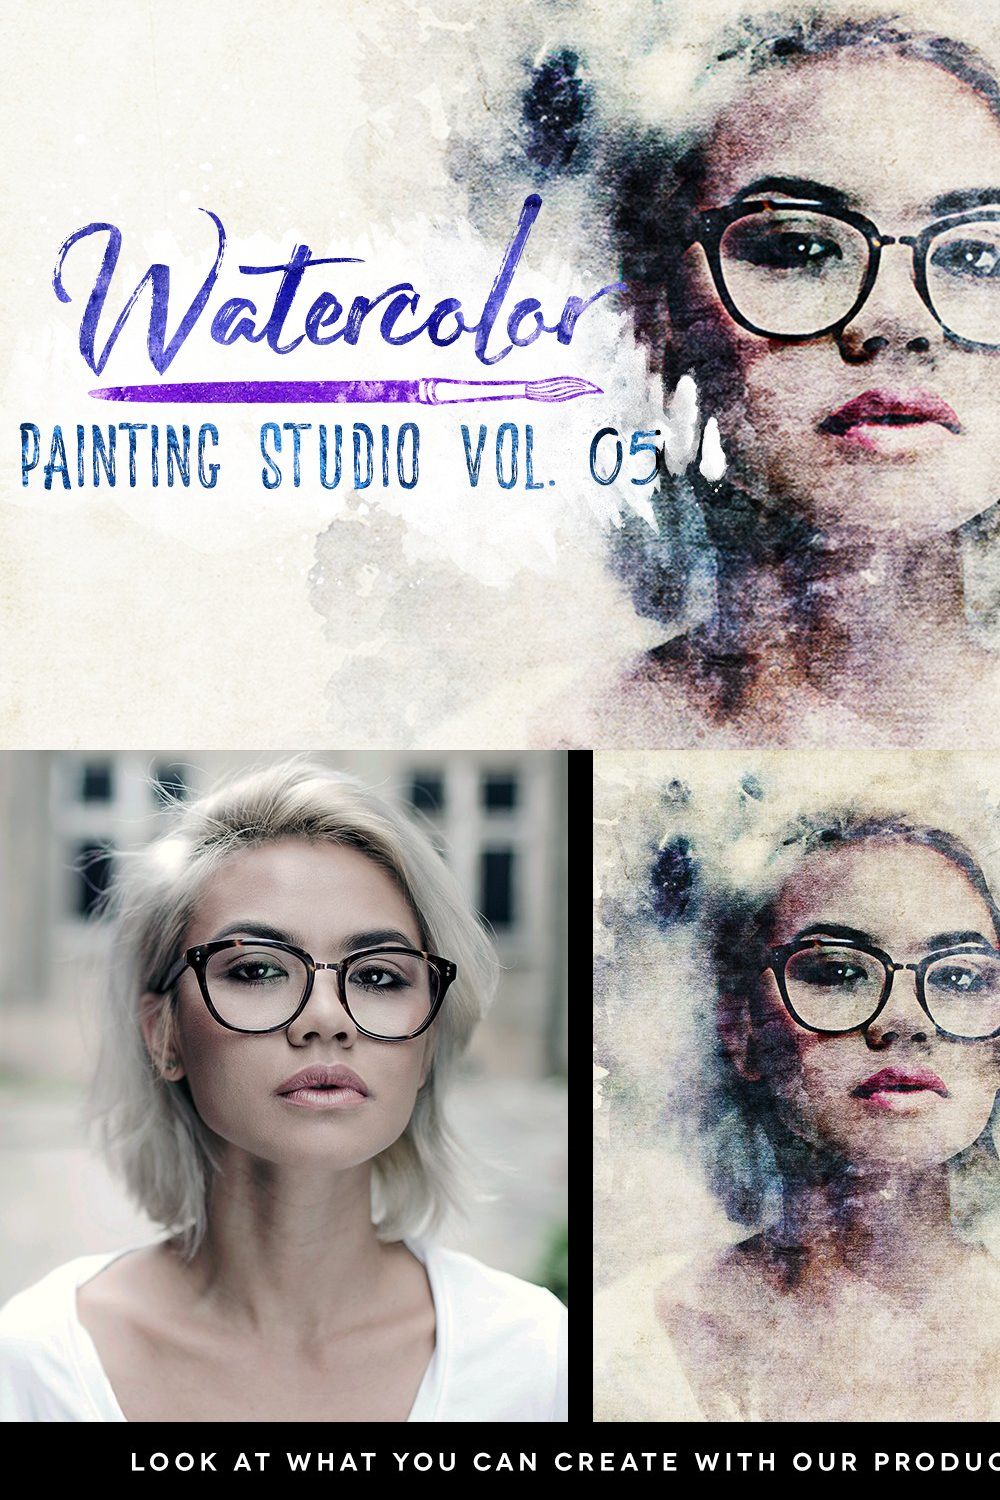 Watercolor Painting Studio Vol. 05 pinterest preview image.